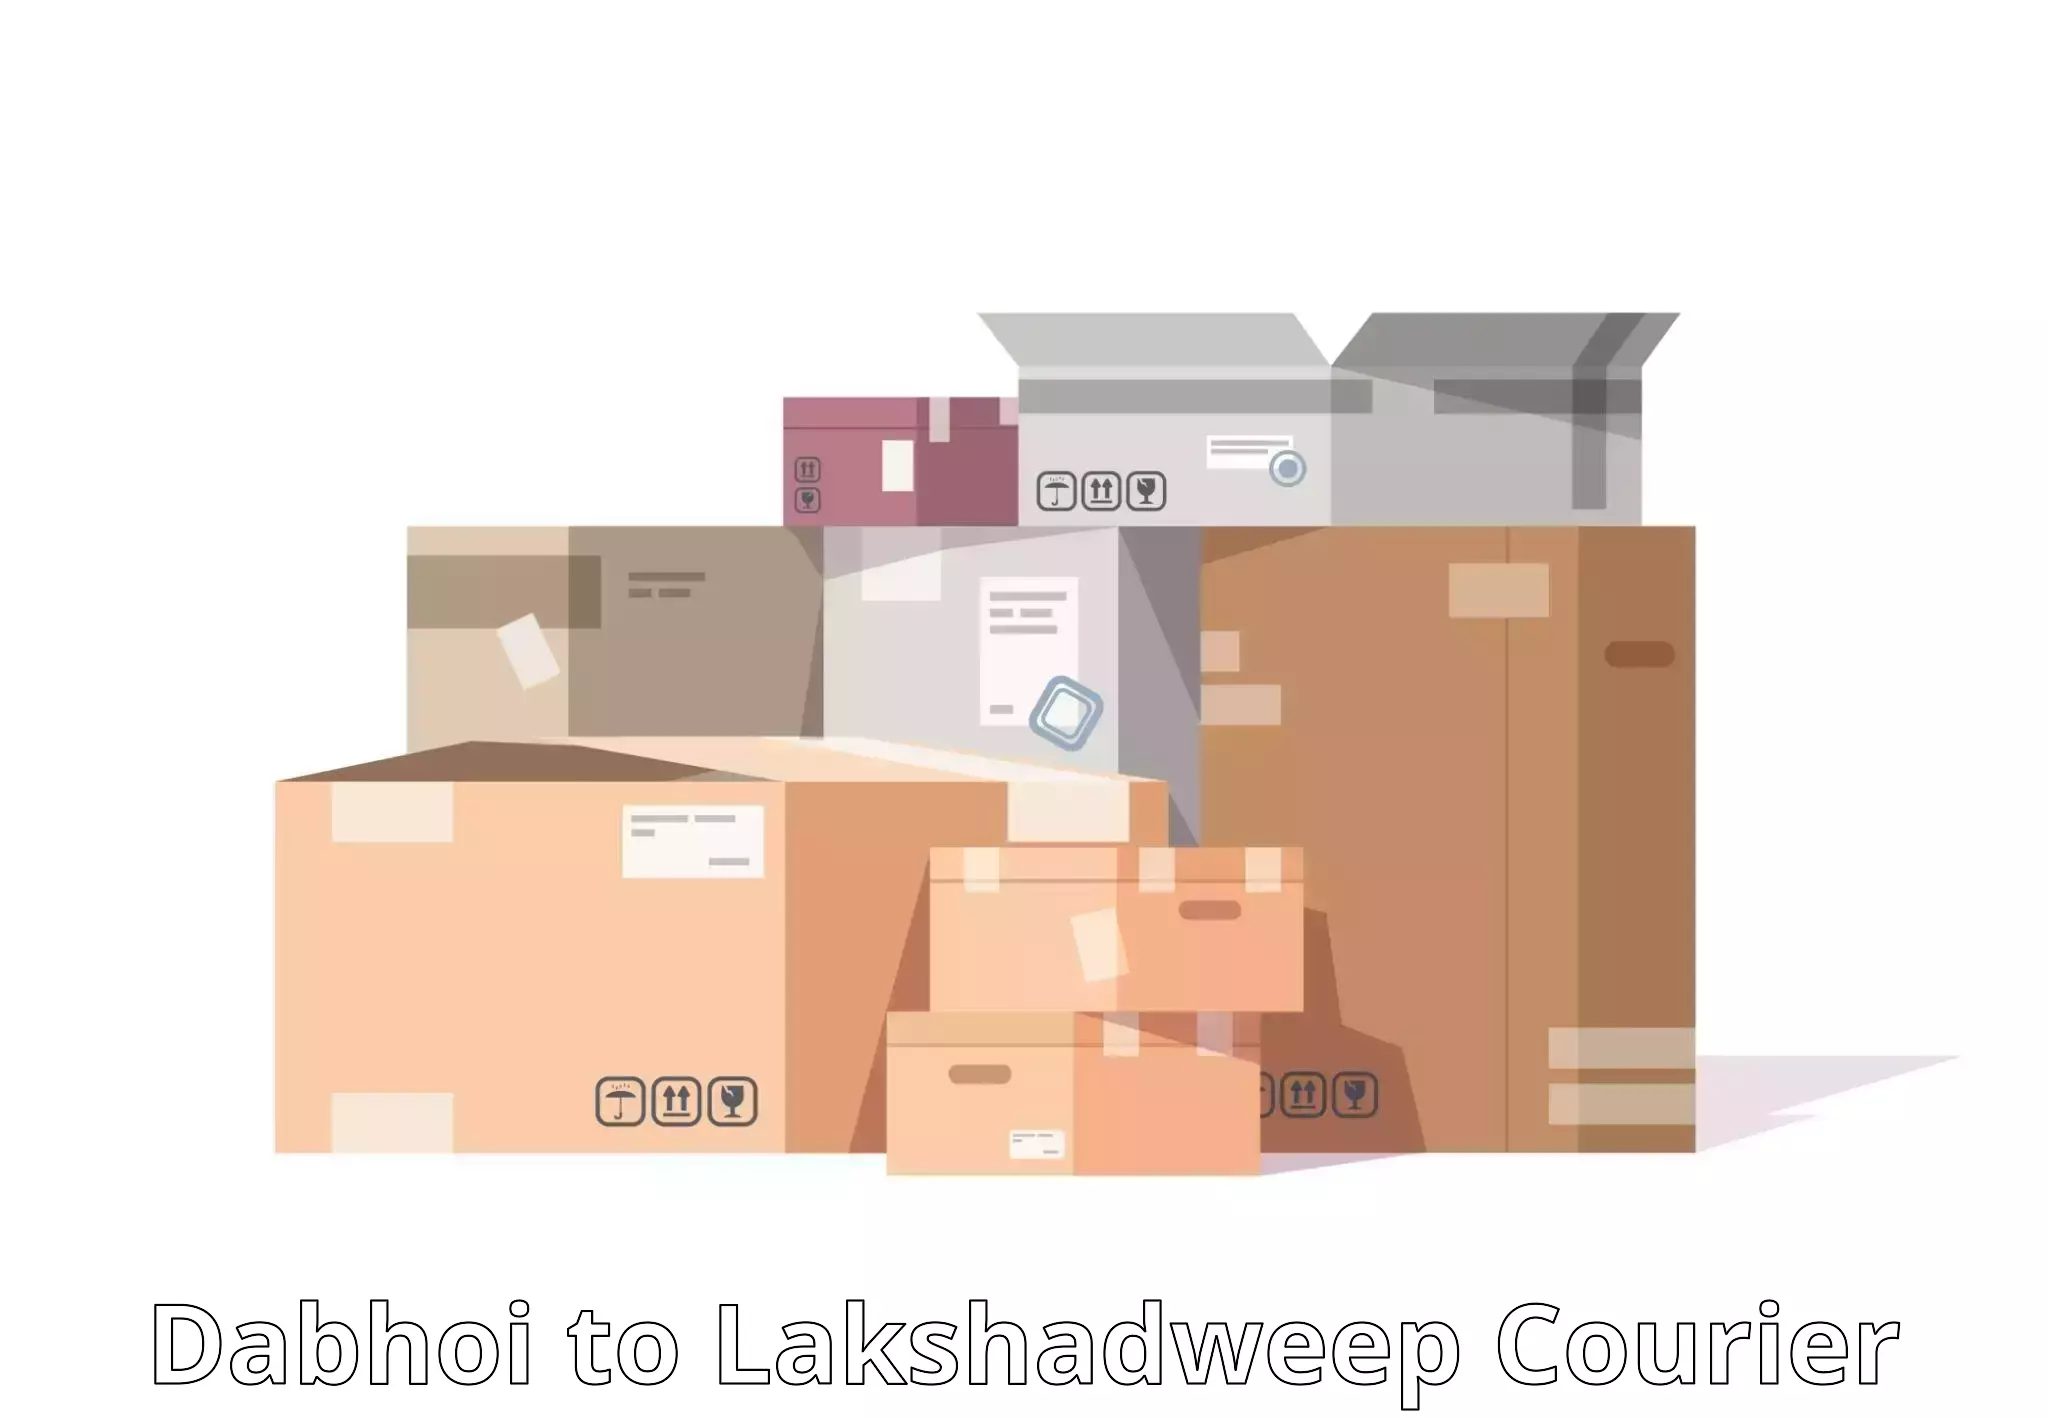 Courier service comparison Dabhoi to Lakshadweep